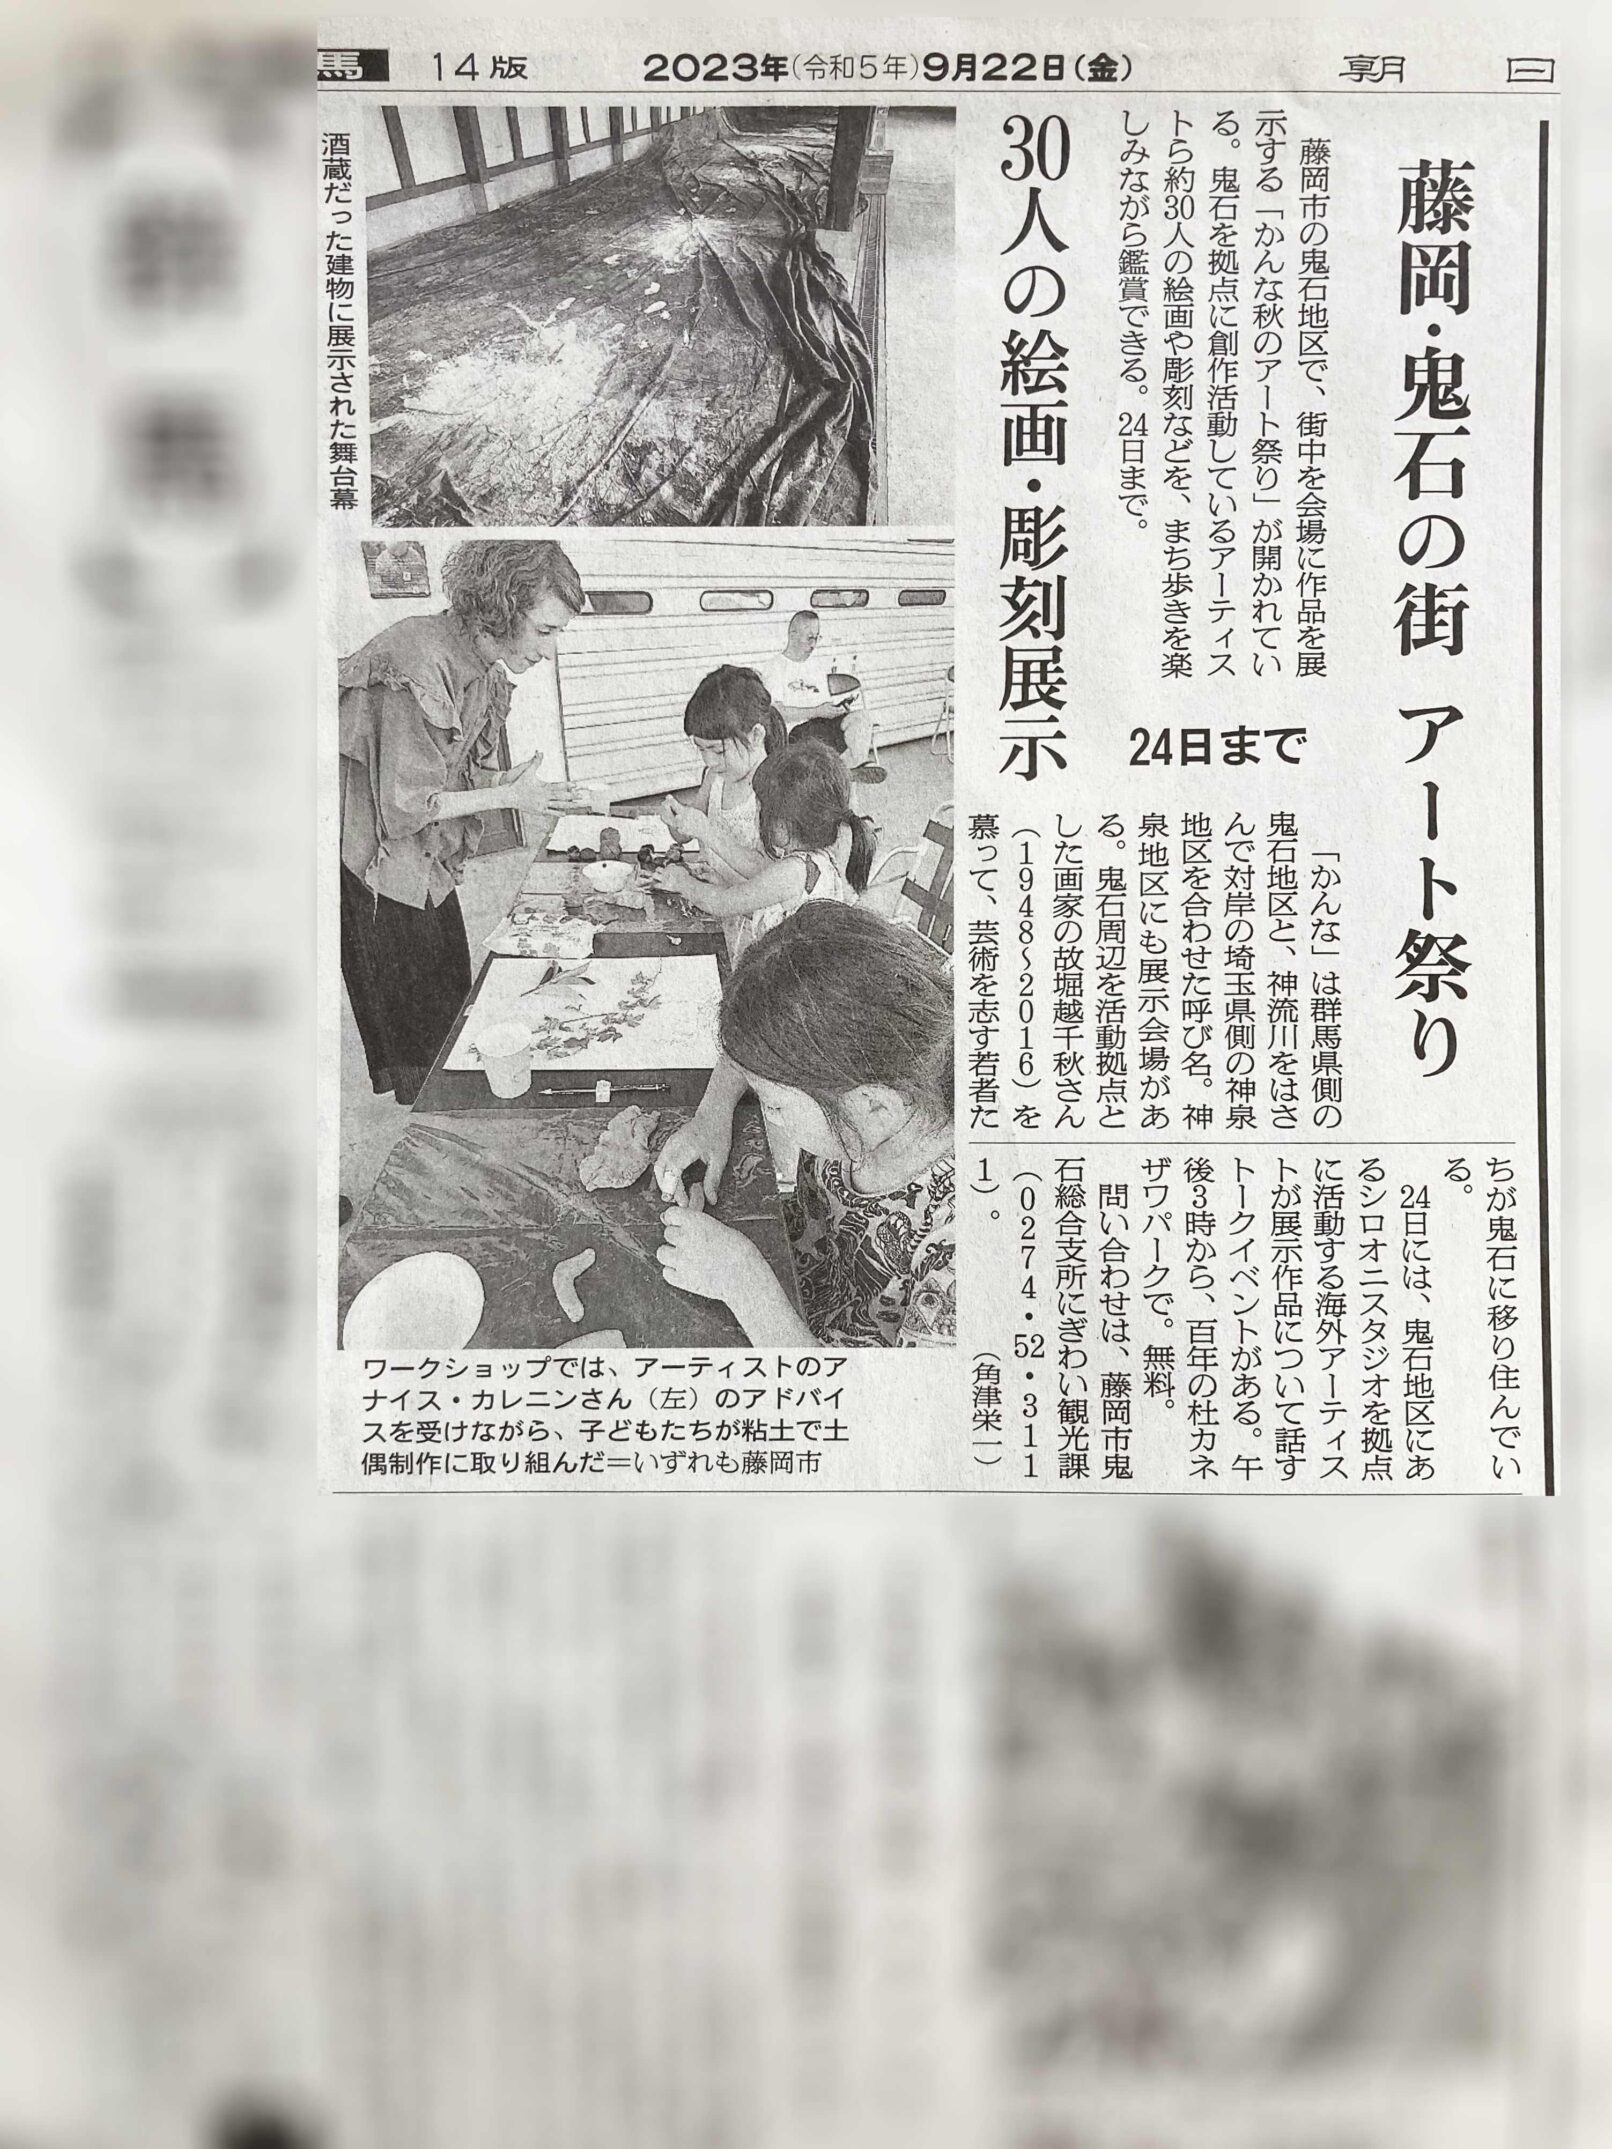 Newspaper Article Asahi Newspaper Anais-karenin